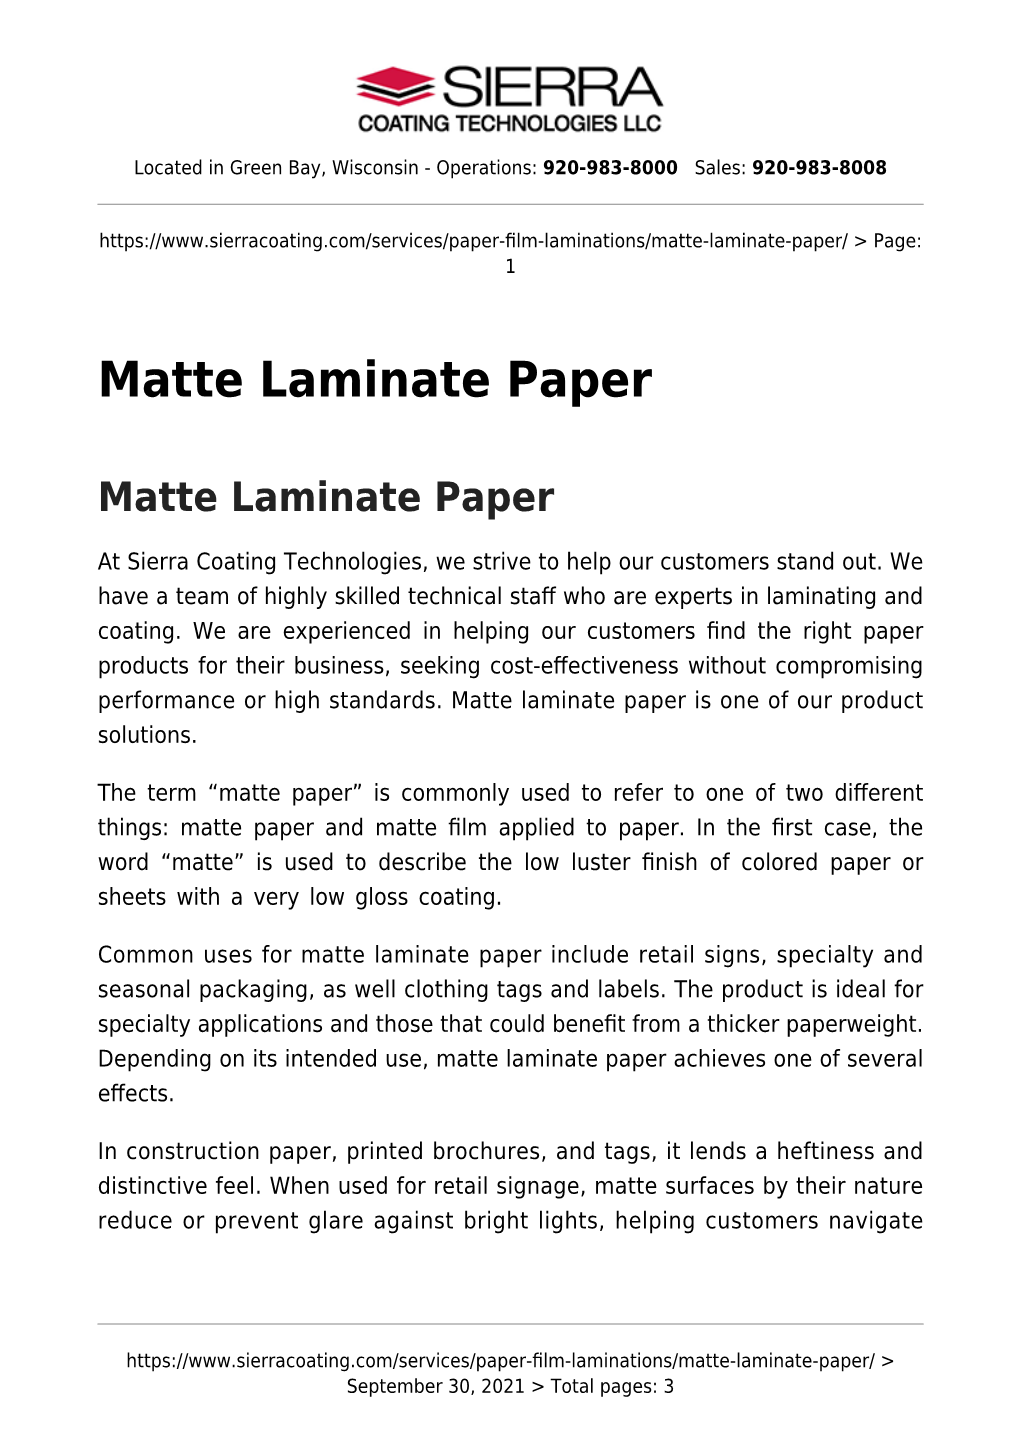 Matte Laminate Paper